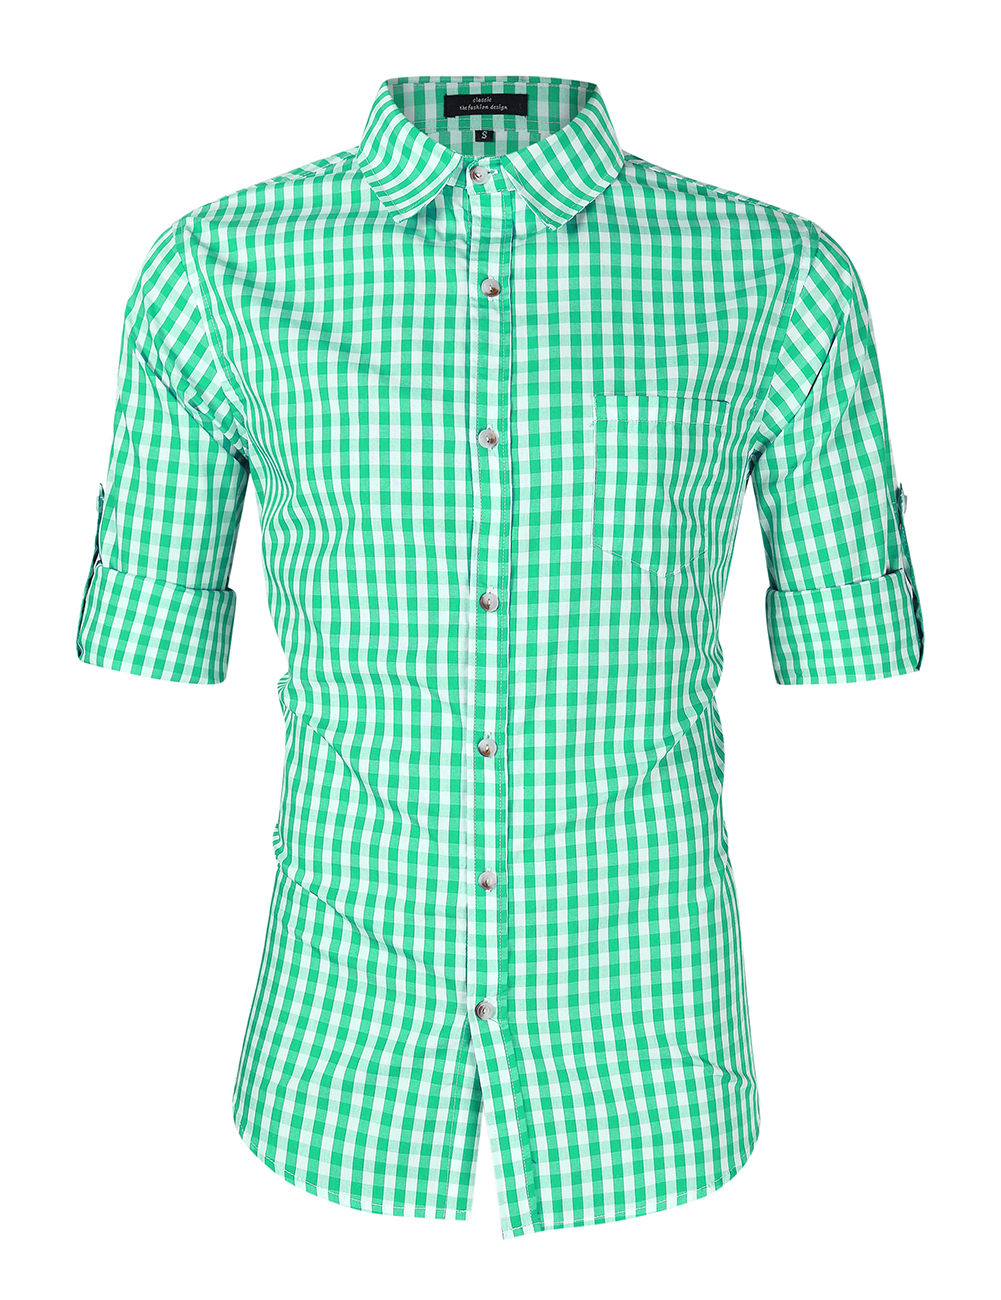 [EU Direct] Men's Oktoberfest Costumes Long Sleeve Shirt Fashion Plaid Front Pocket Classical Shirt Tops